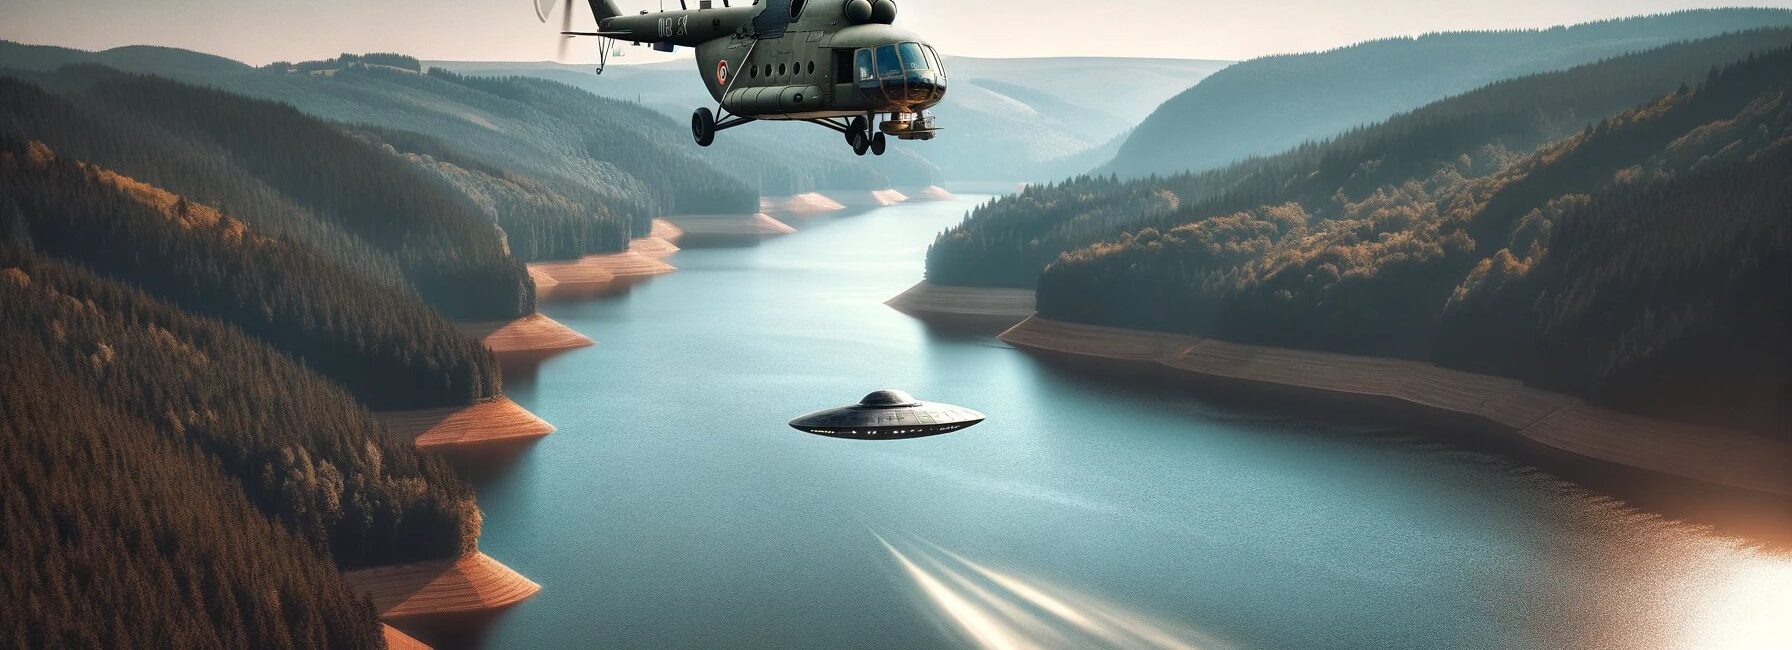 Vrtulnik armady pronasledujici UFO nad prehradou